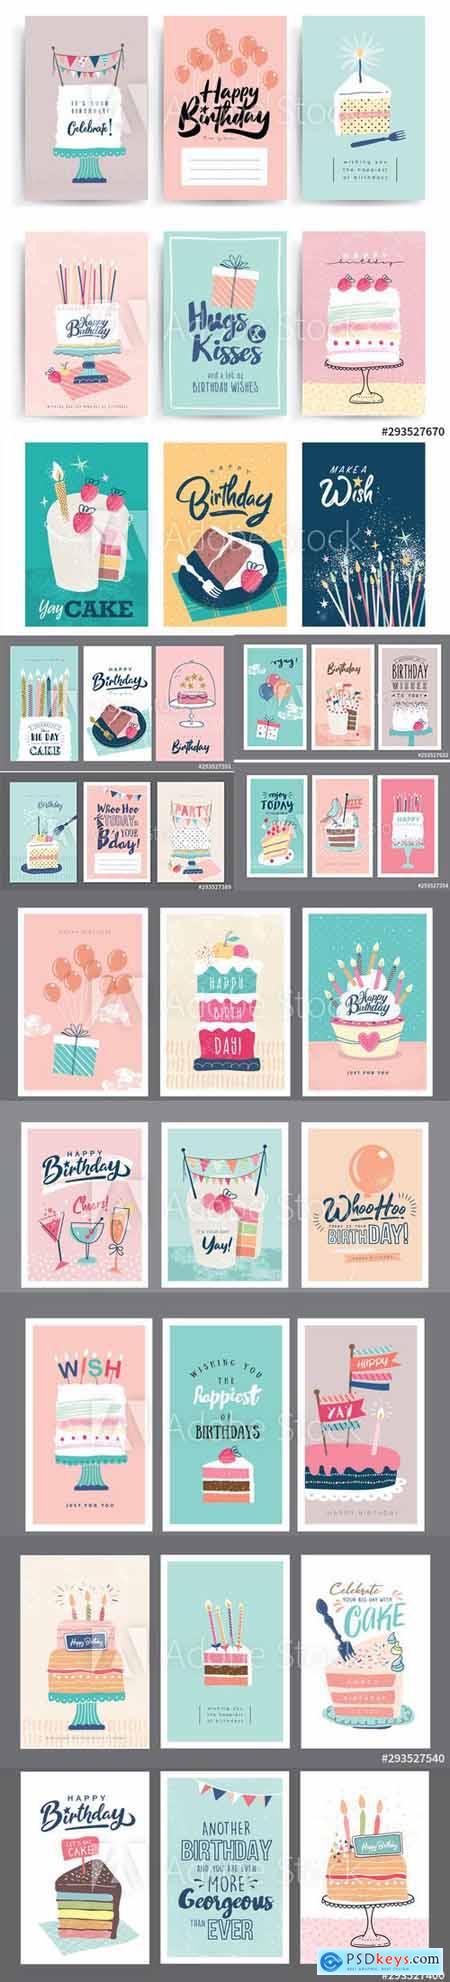 Set of Birthday Greeting Cards Illustrations